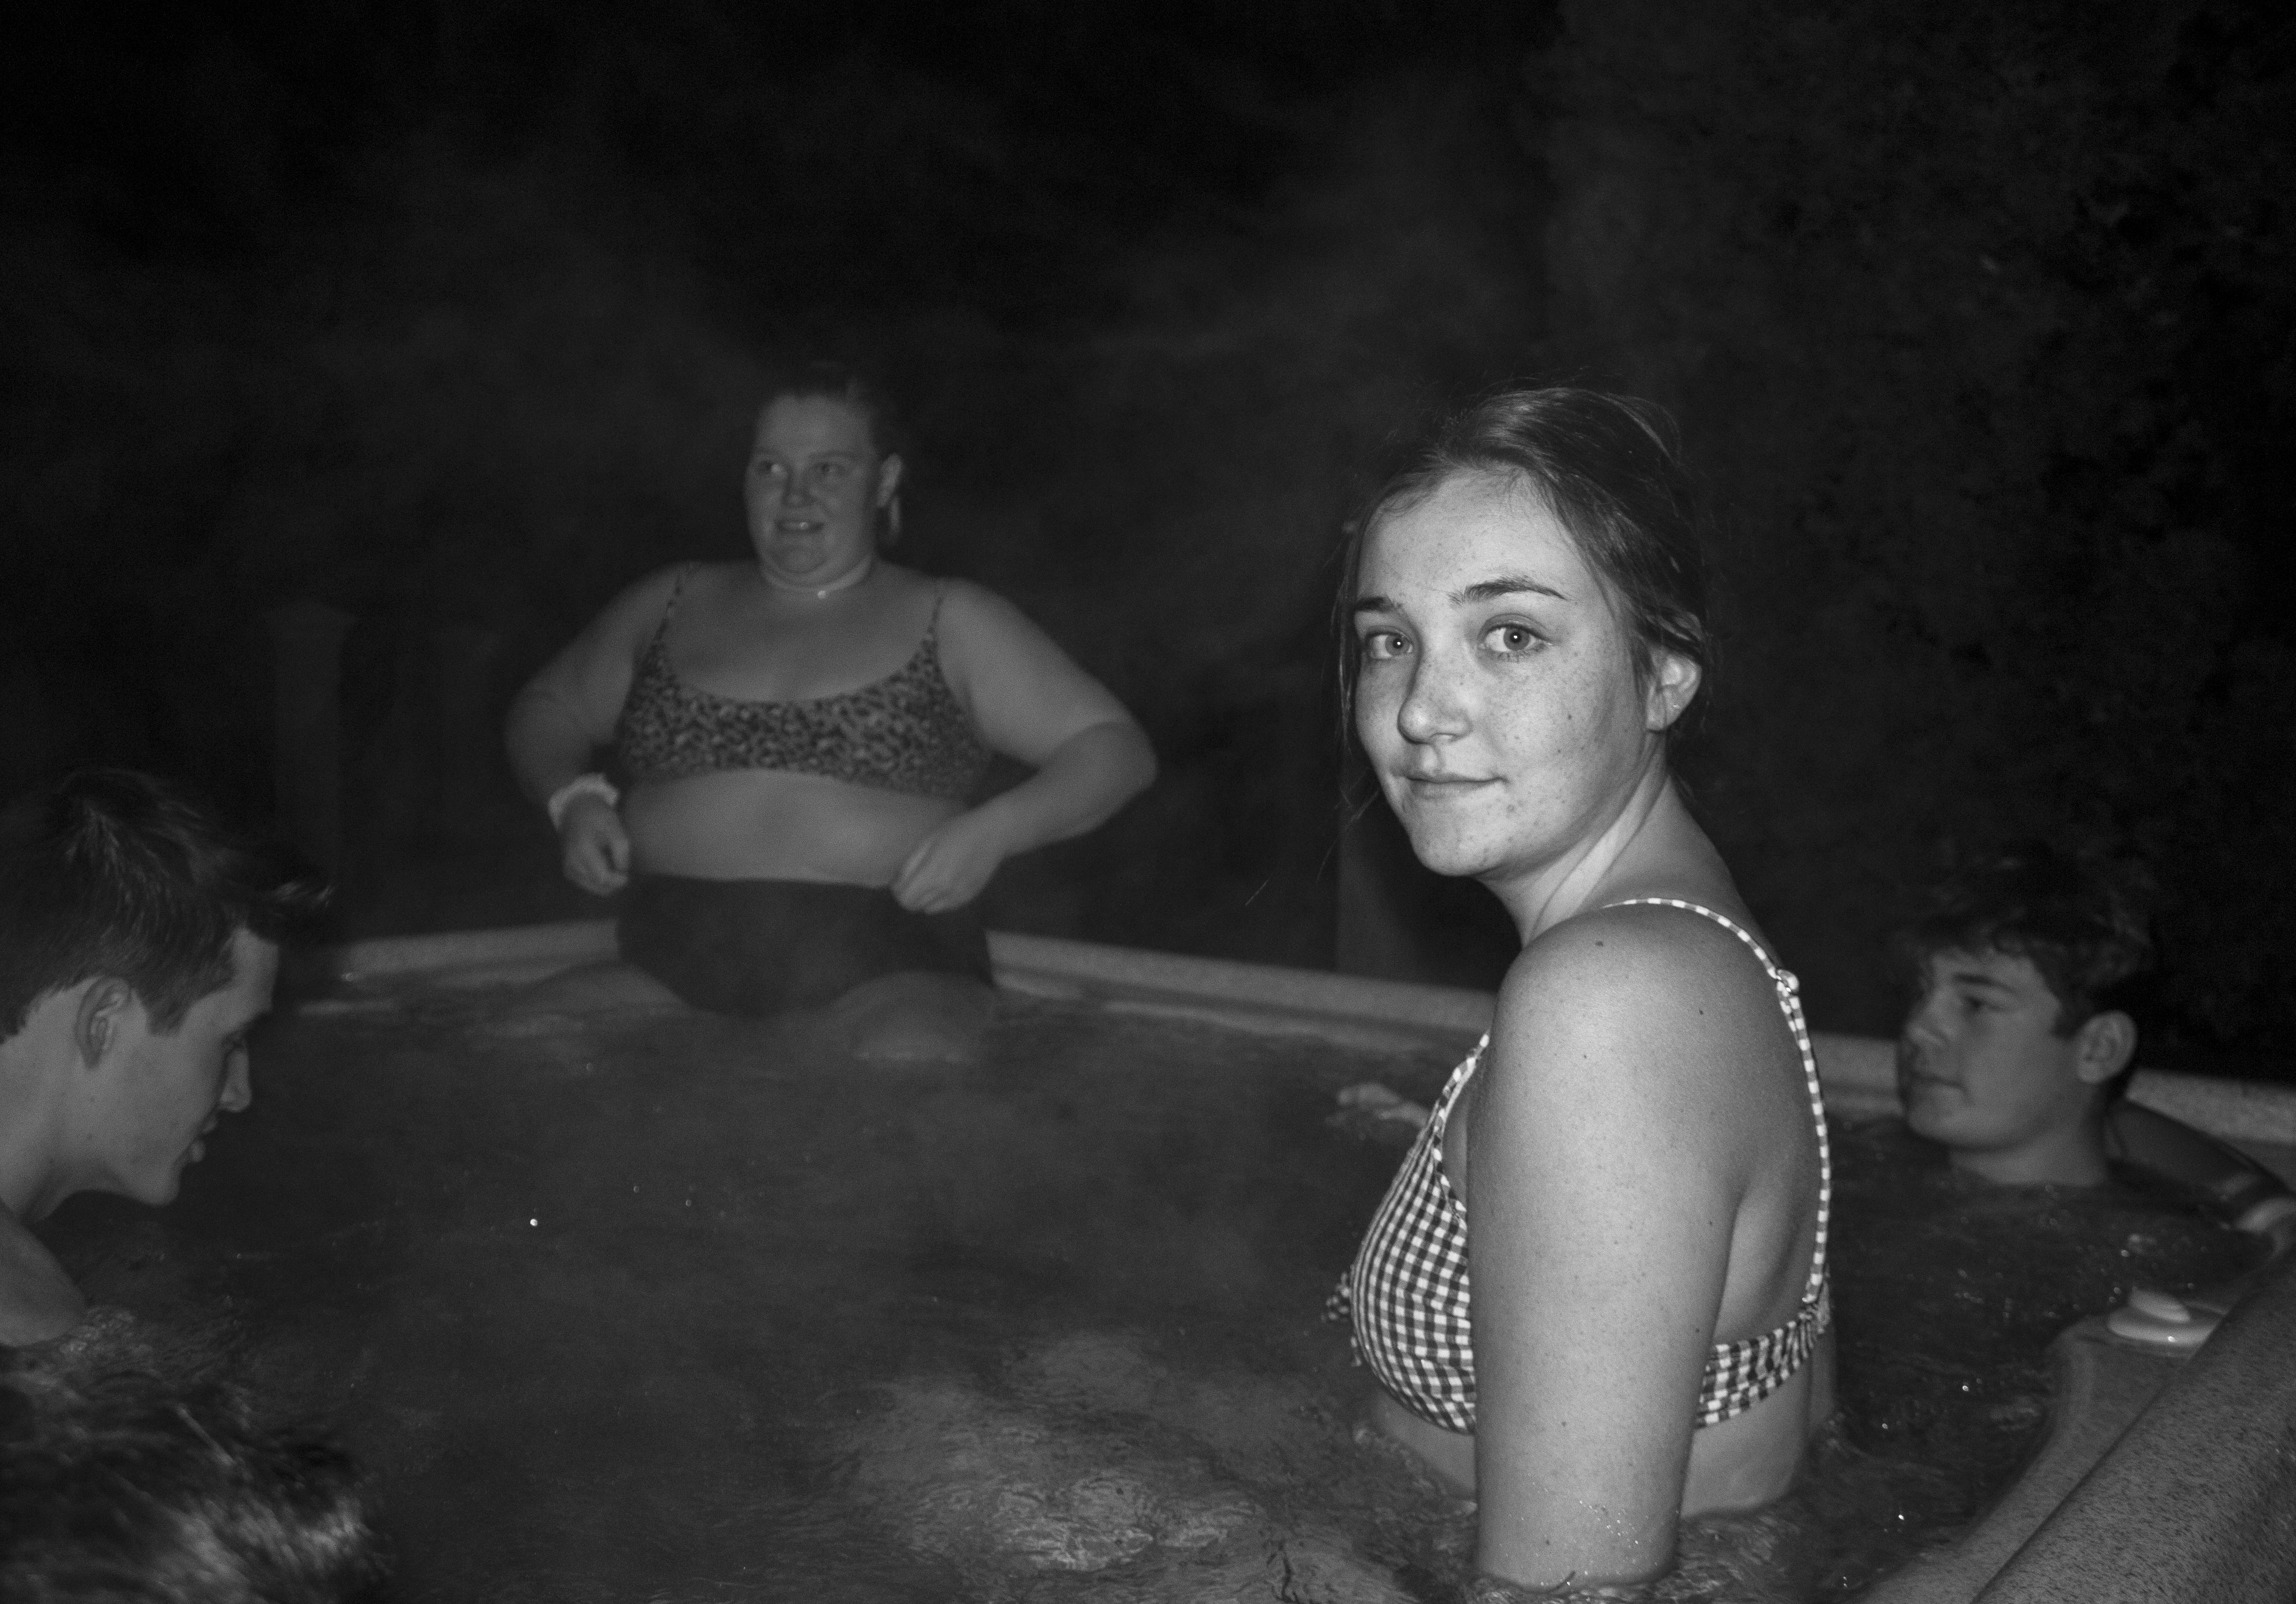 Lauren Verlinde enjoying hot tub time with her cousins.